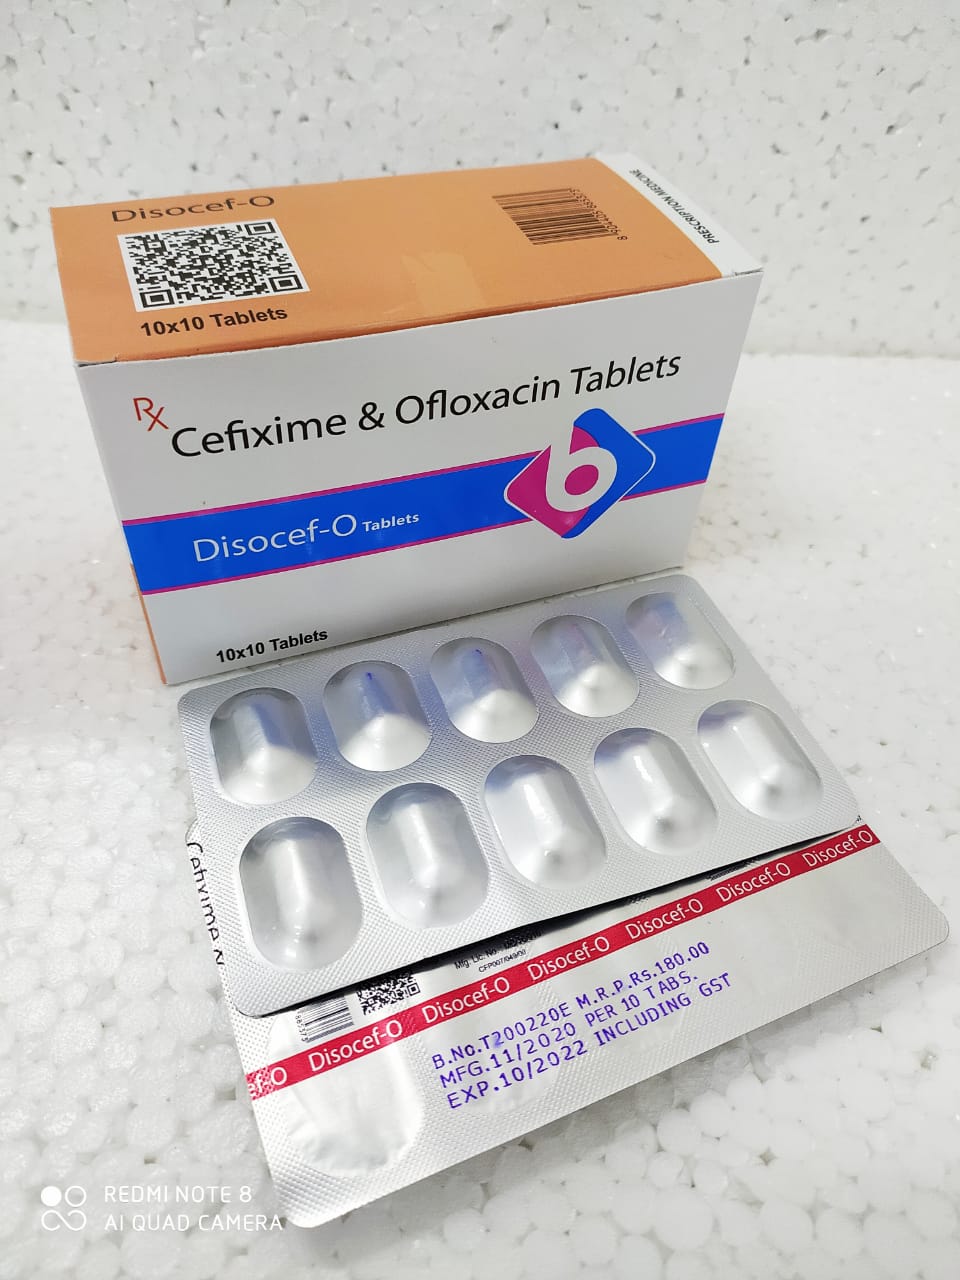 cefixime 200 mg + ofloxacin 200 mg